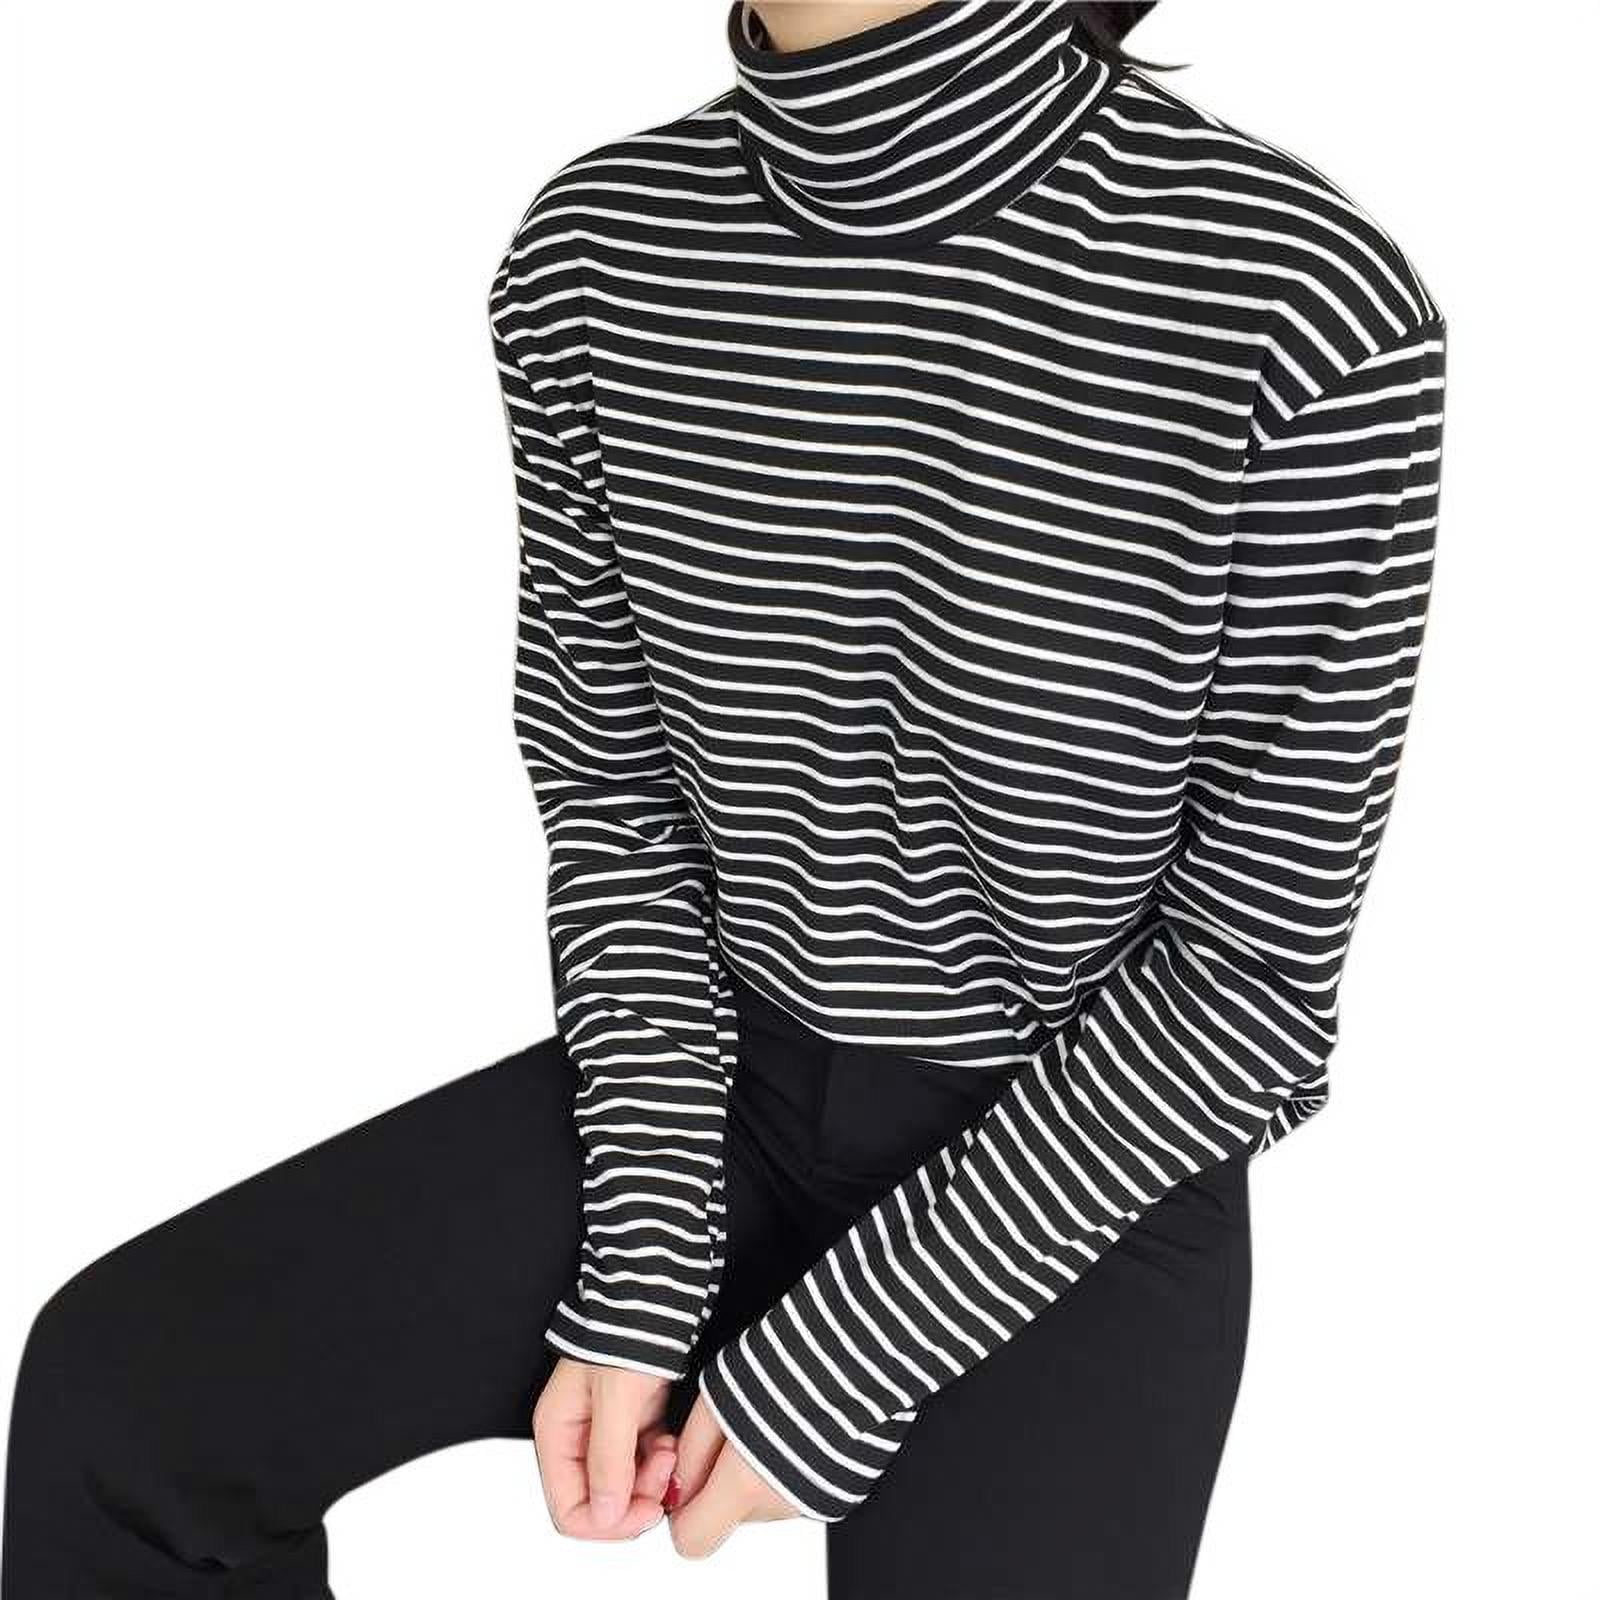 Fire ice Longsleeve striped pattern casual look Fashion Shirts Longsleeves 